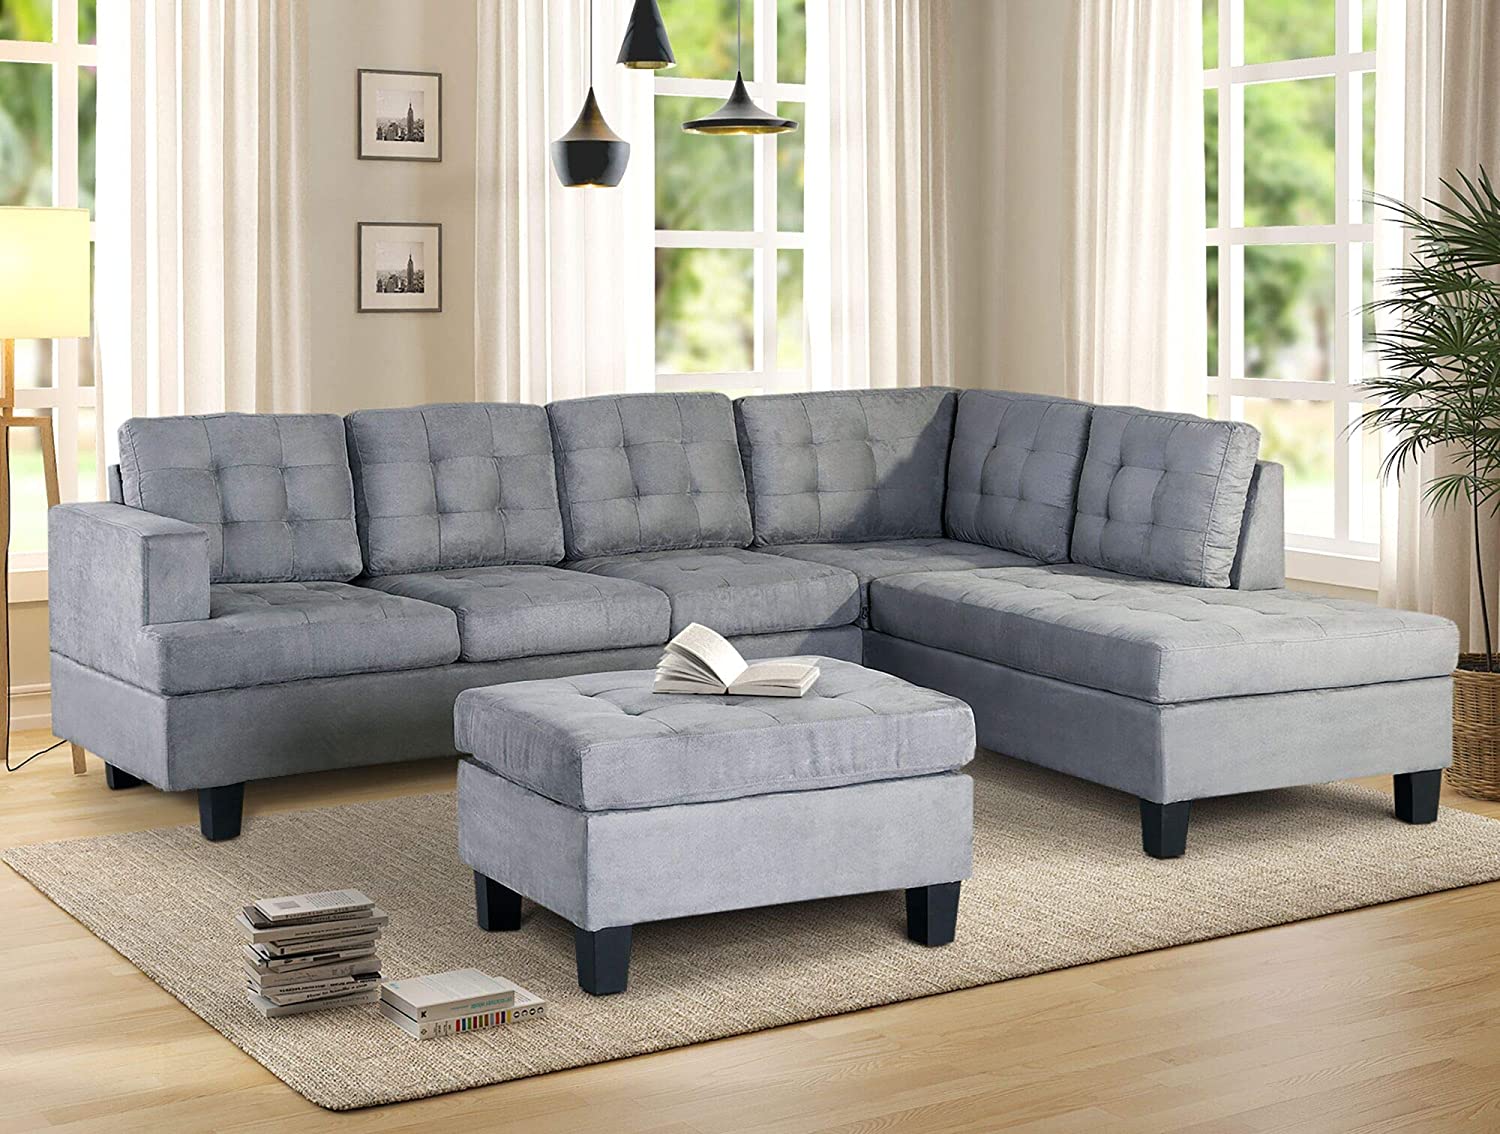 Civil Furniture 3-seat Living Room Sofas Sets